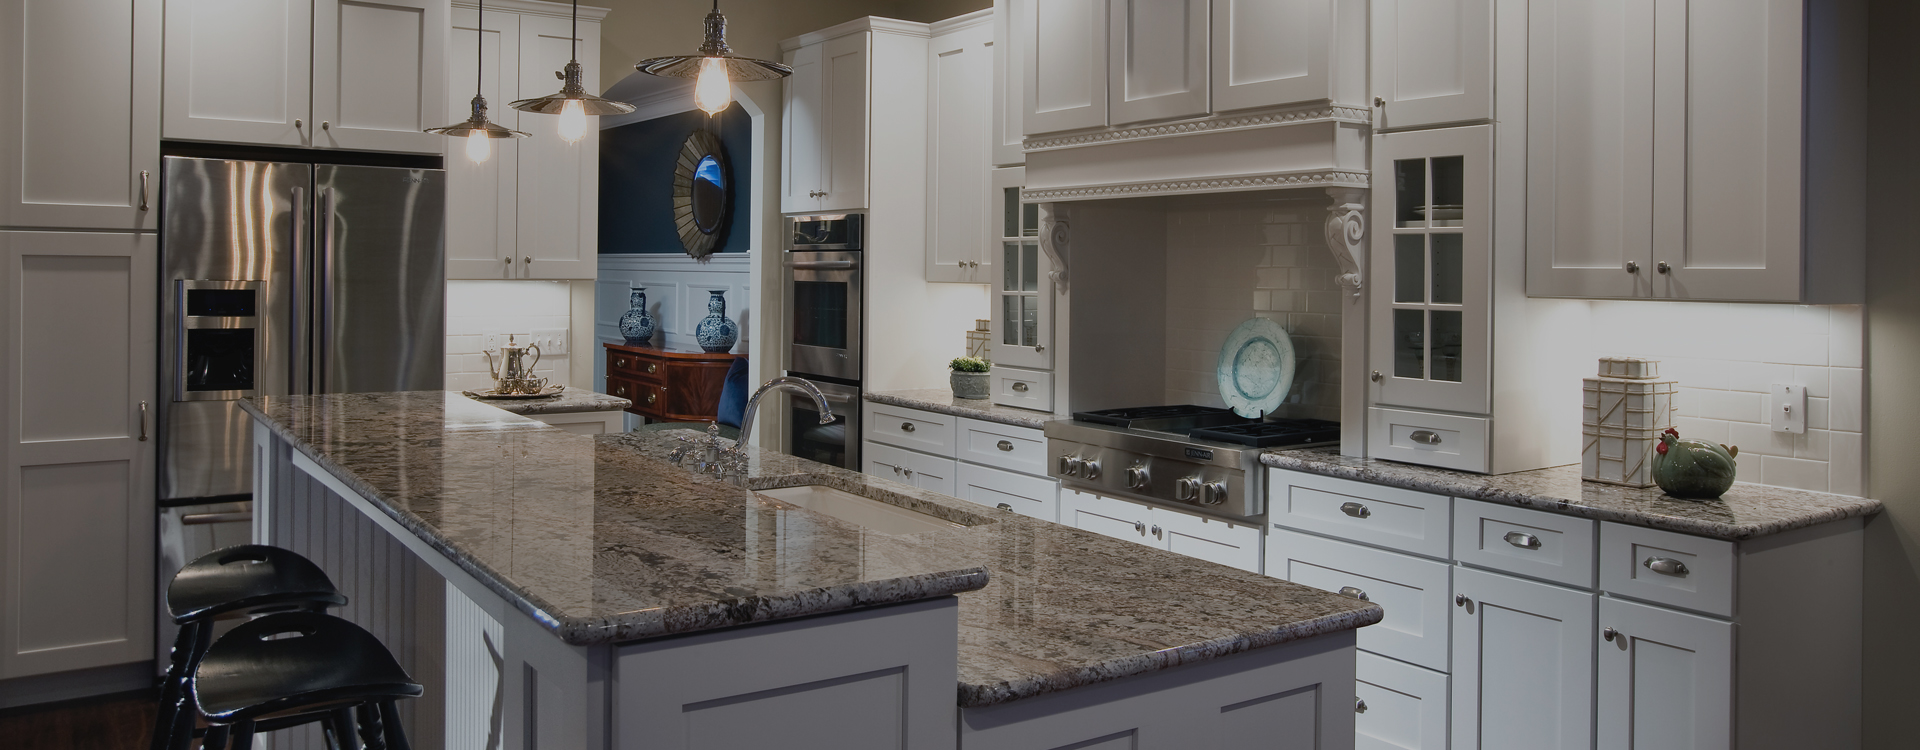 Basic Facts About Granite Kitchen Worktop